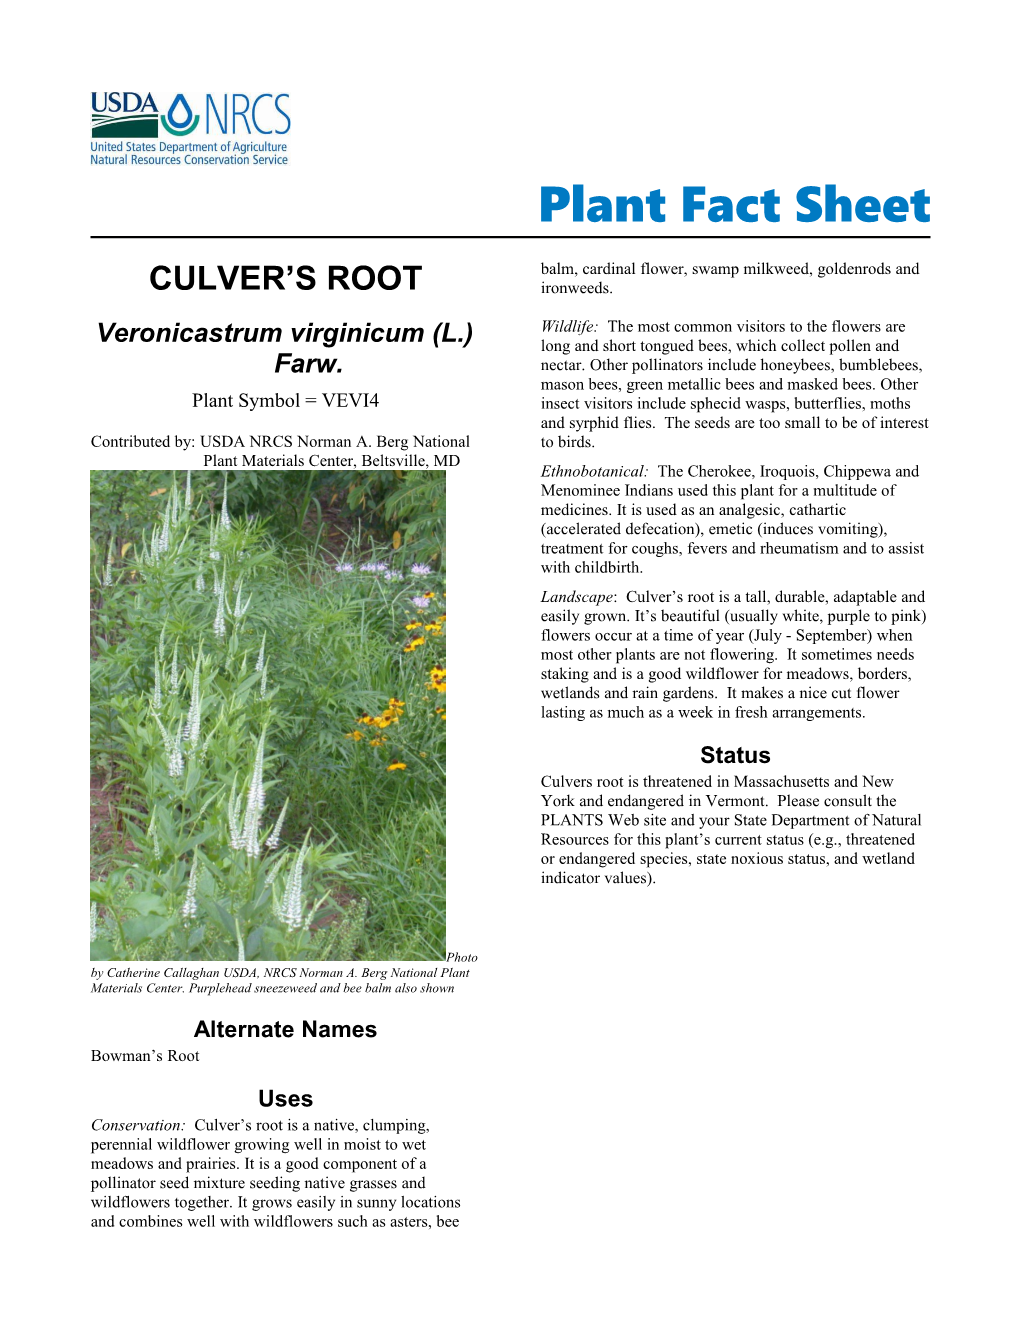 Culver's Root, (Veronicastrum Virginicum) Plant Fact Sheet